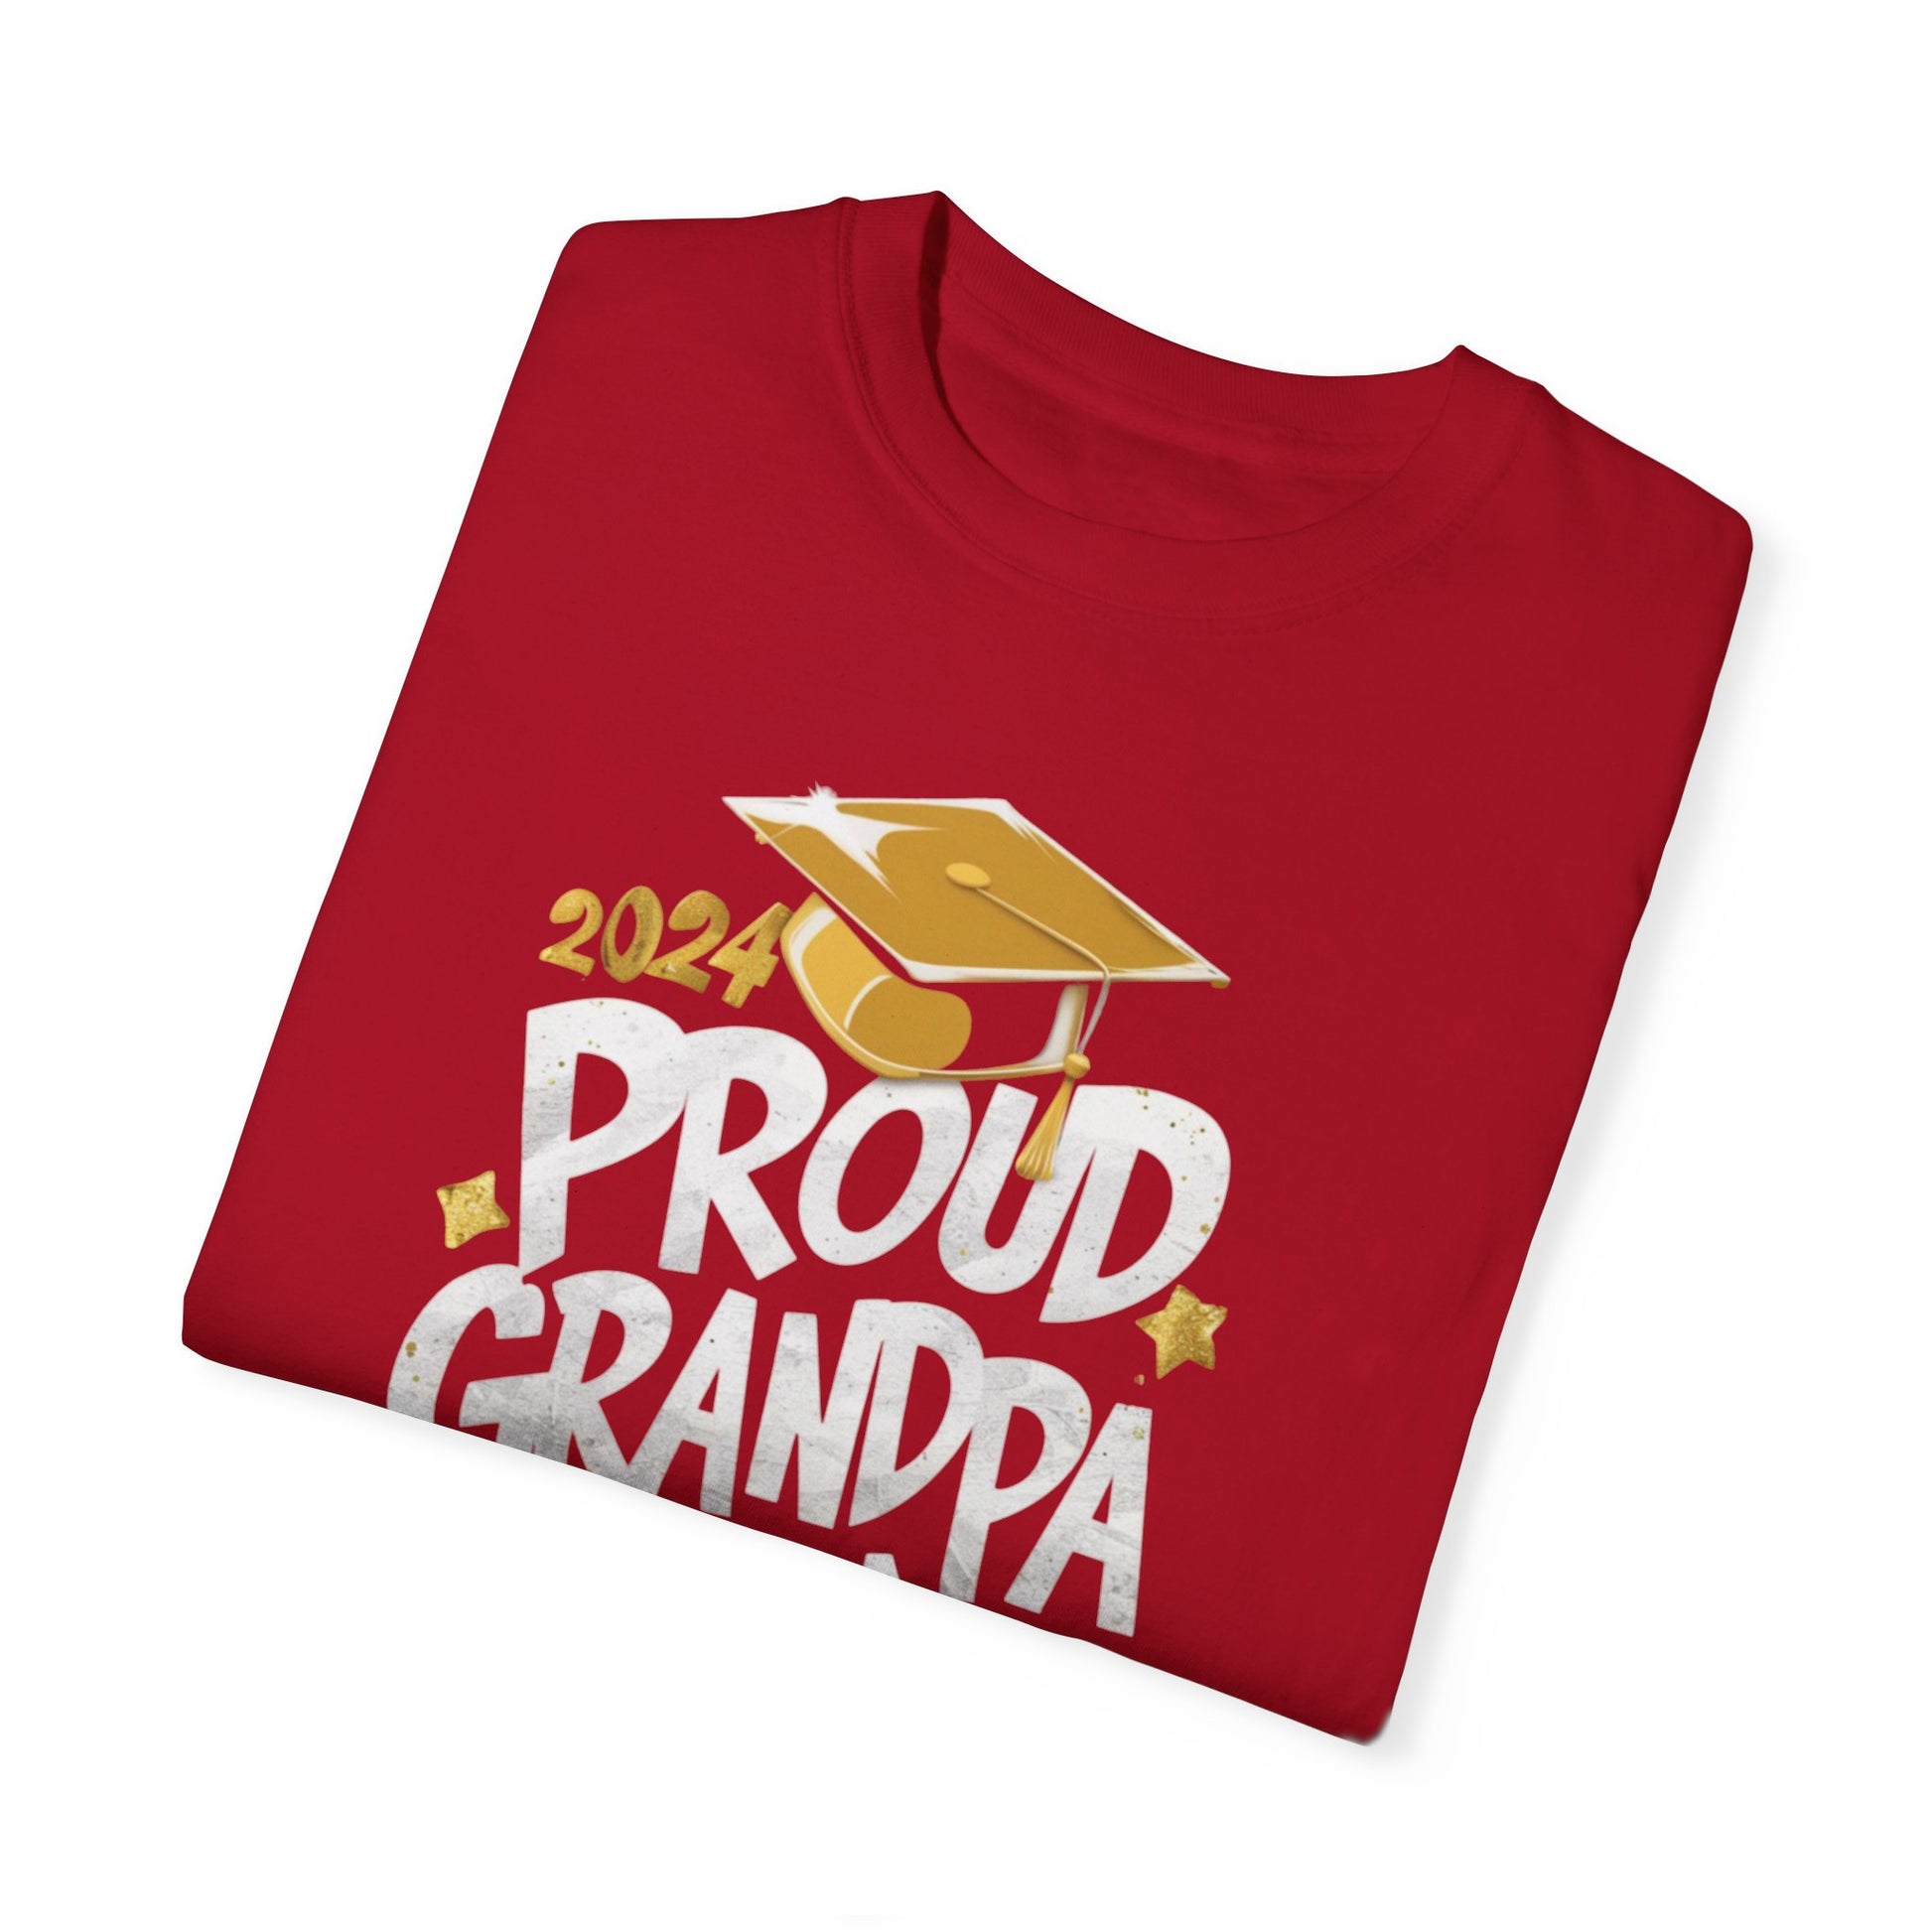 Proud Grandpa of a 2024 Graduate Unisex Garment-dyed T-shirt Cotton Funny Humorous Graphic Soft Premium Unisex Men Women Red T-shirt Birthday Gift-20